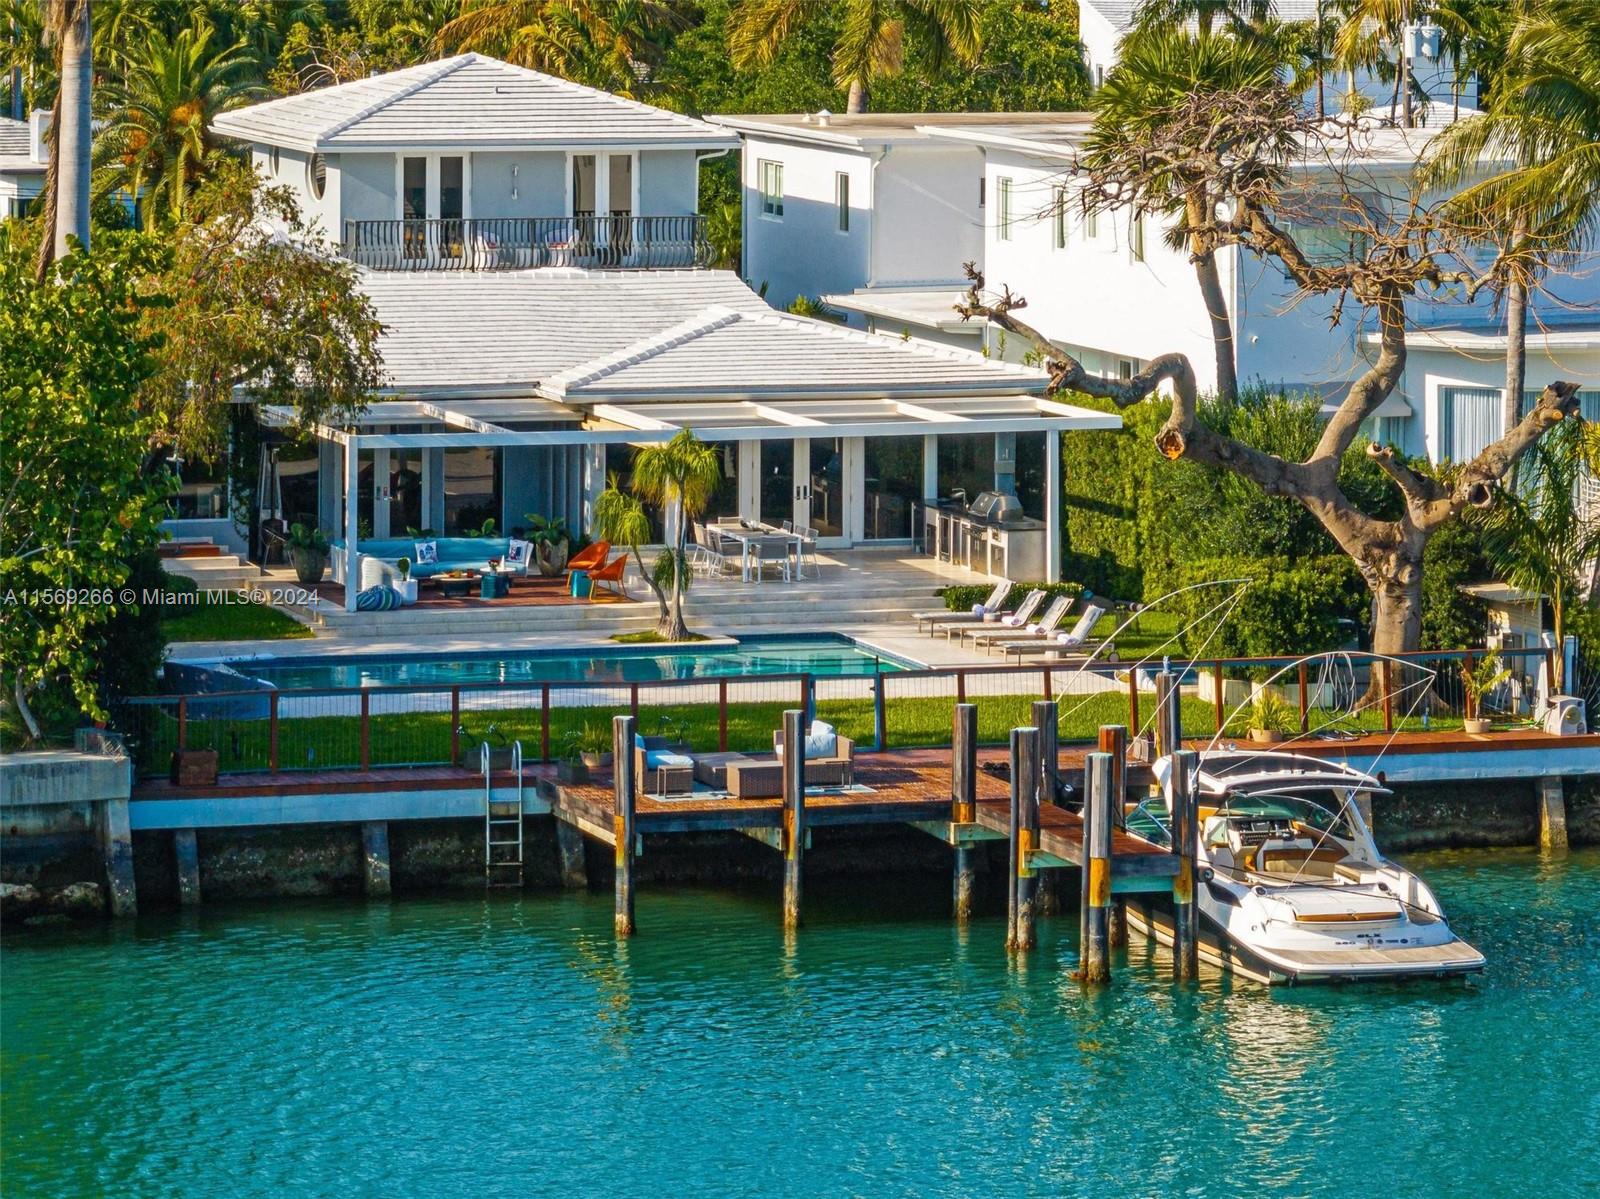 Rental Property at 588 Lakeview Dr, Miami Beach, Miami-Dade County, Florida - Bedrooms: 5 
Bathrooms: 4  - $64,500 MO.